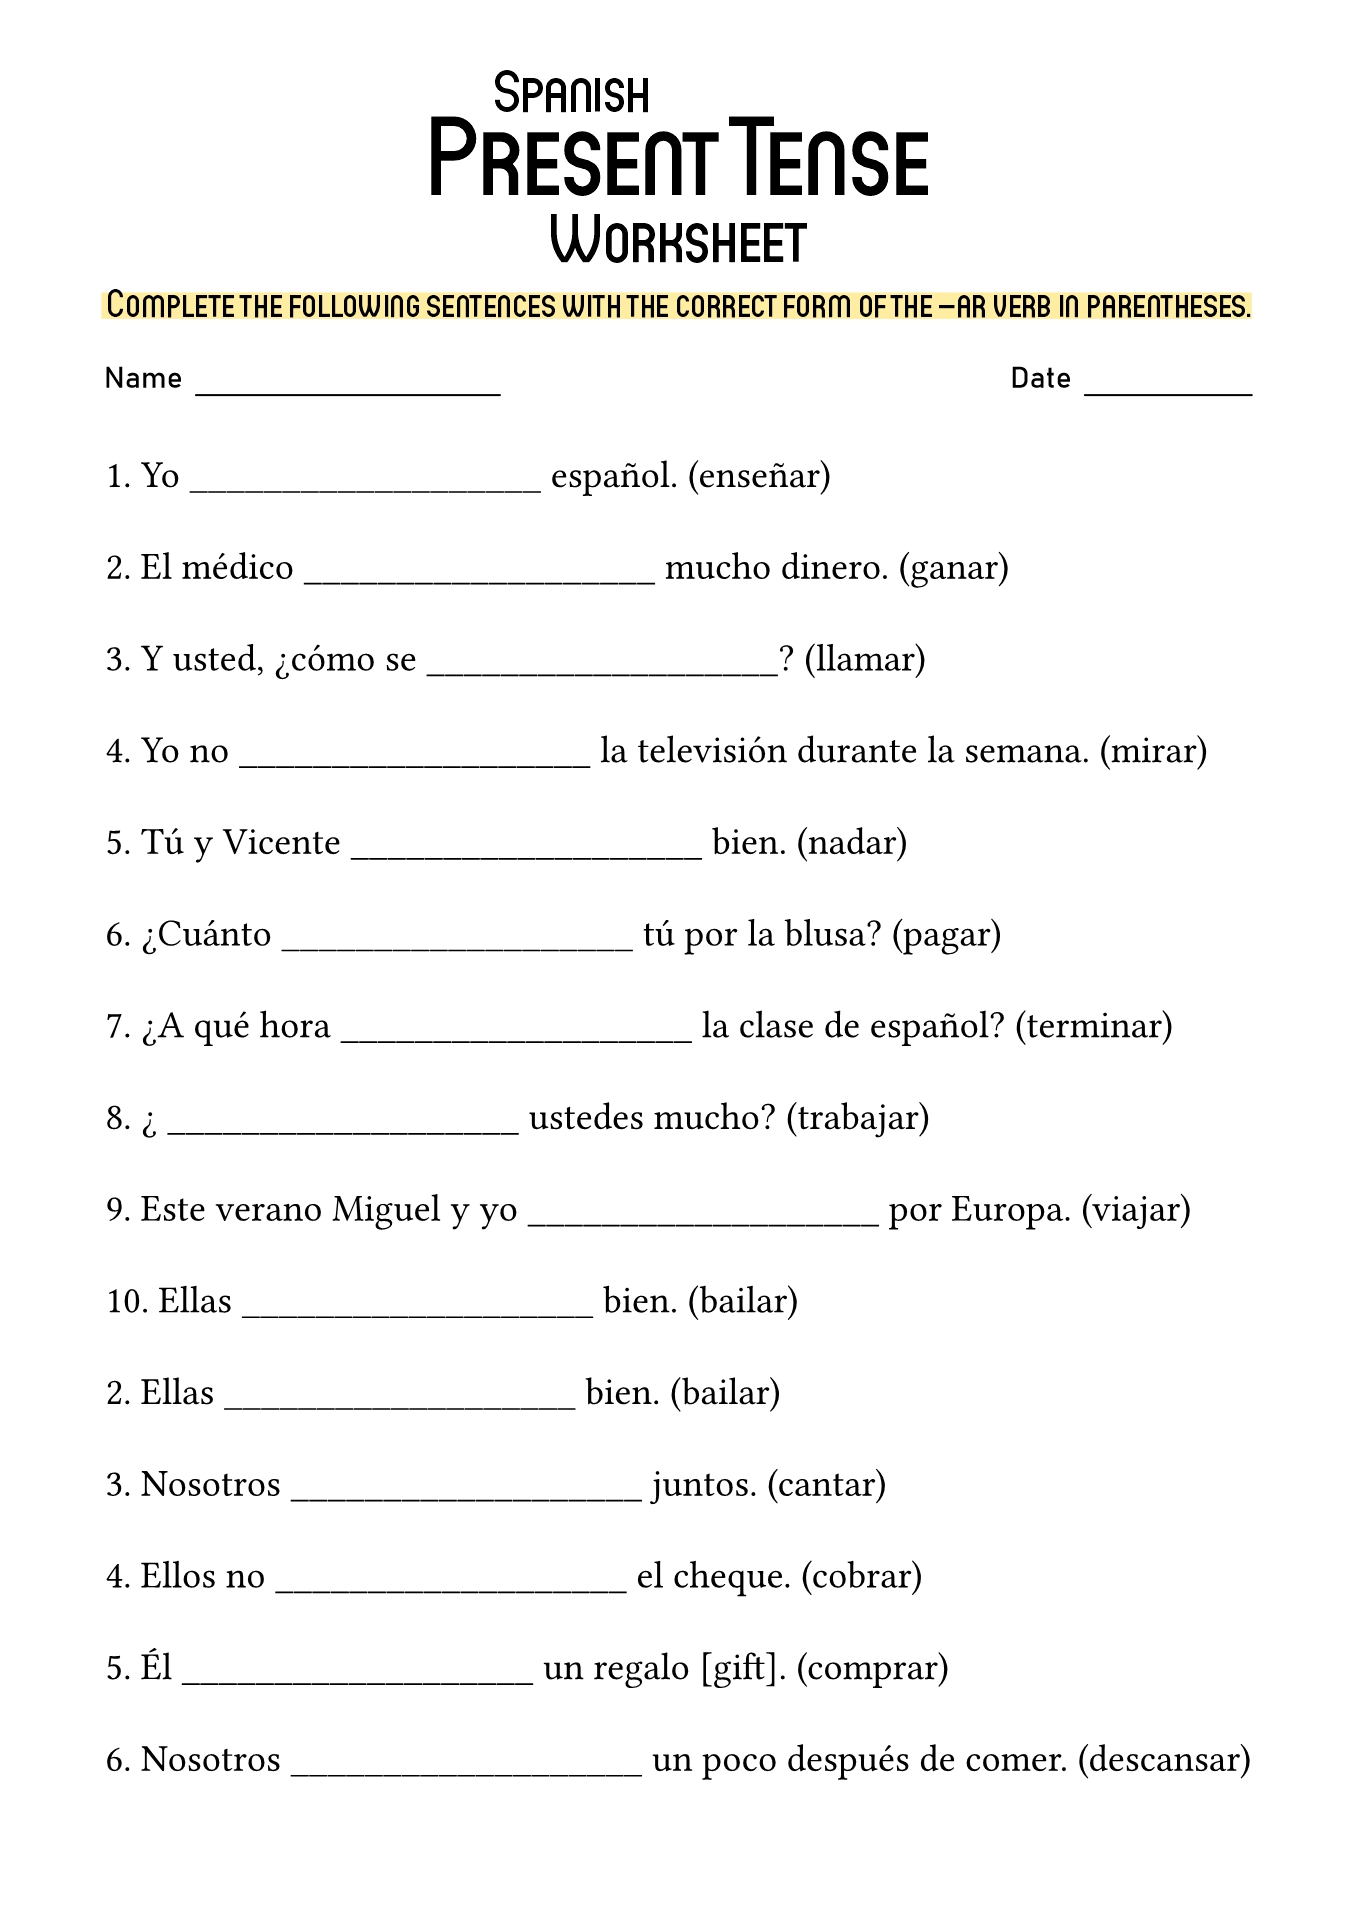 Spanish AR Verb Conjugation Worksheet Image